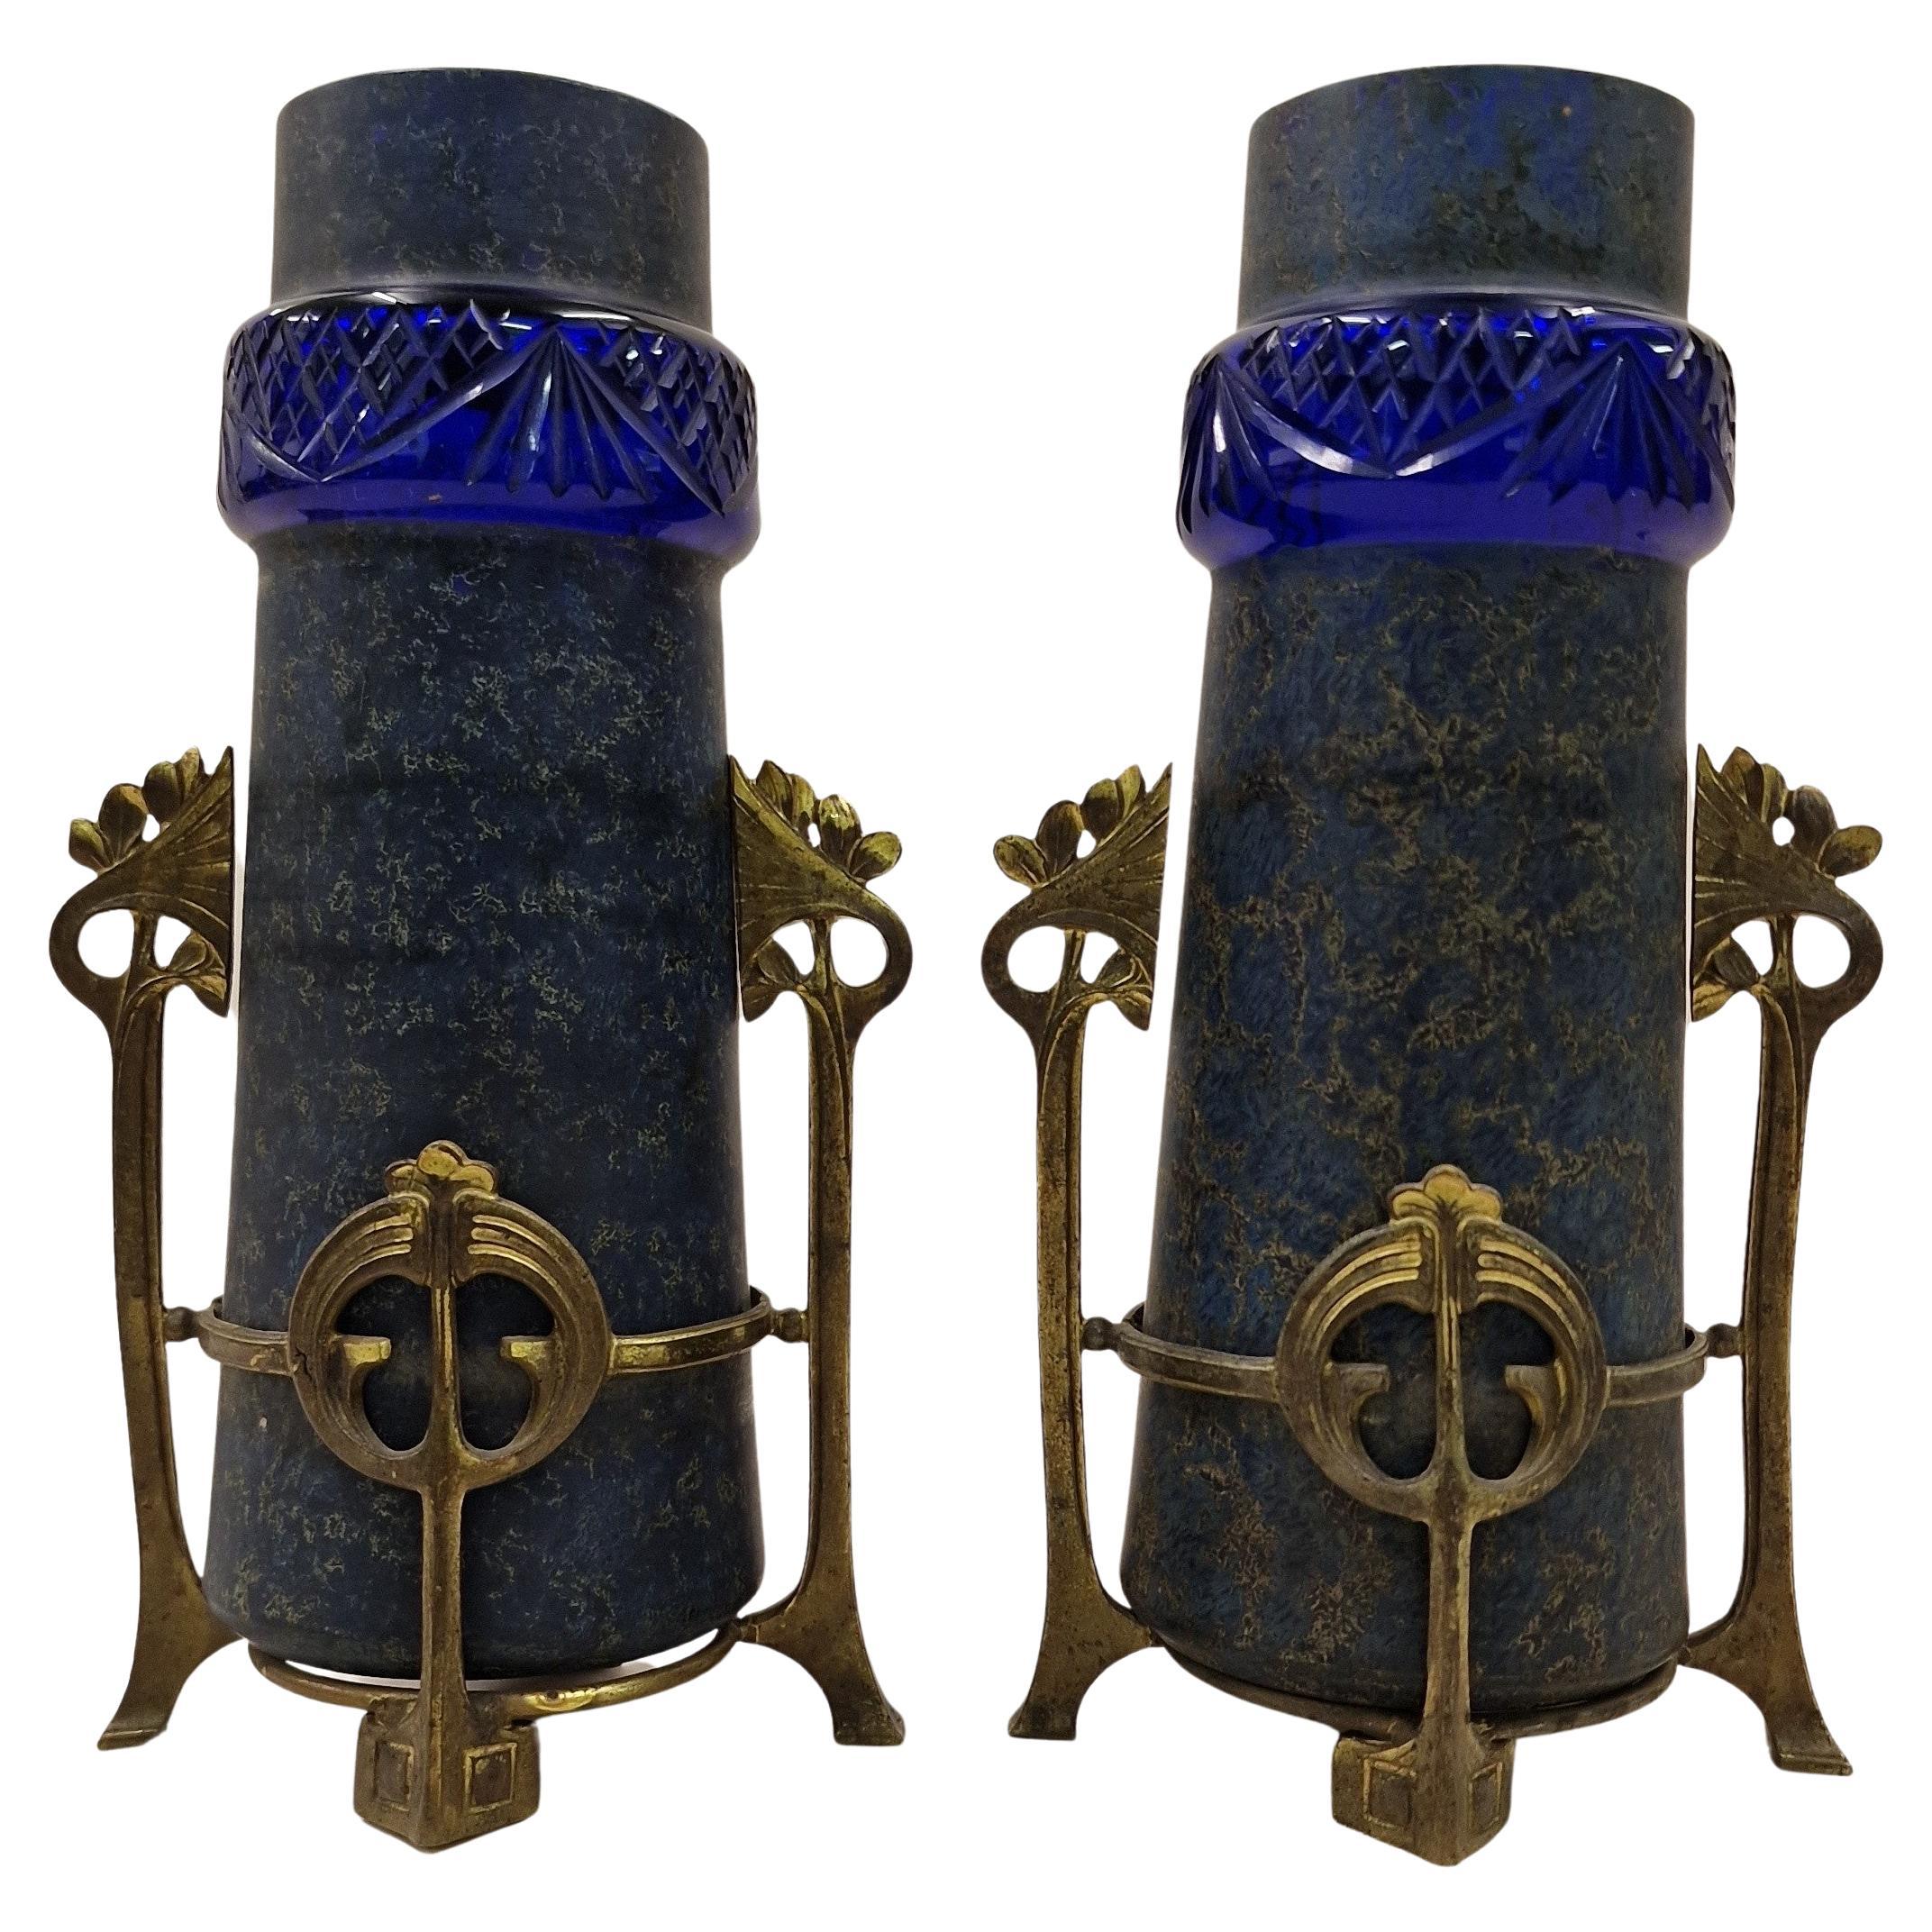 Wunderschönes Paar blaue Vasen, Glas, Bronze, um 1900, Jugendstil / Art Nouveau